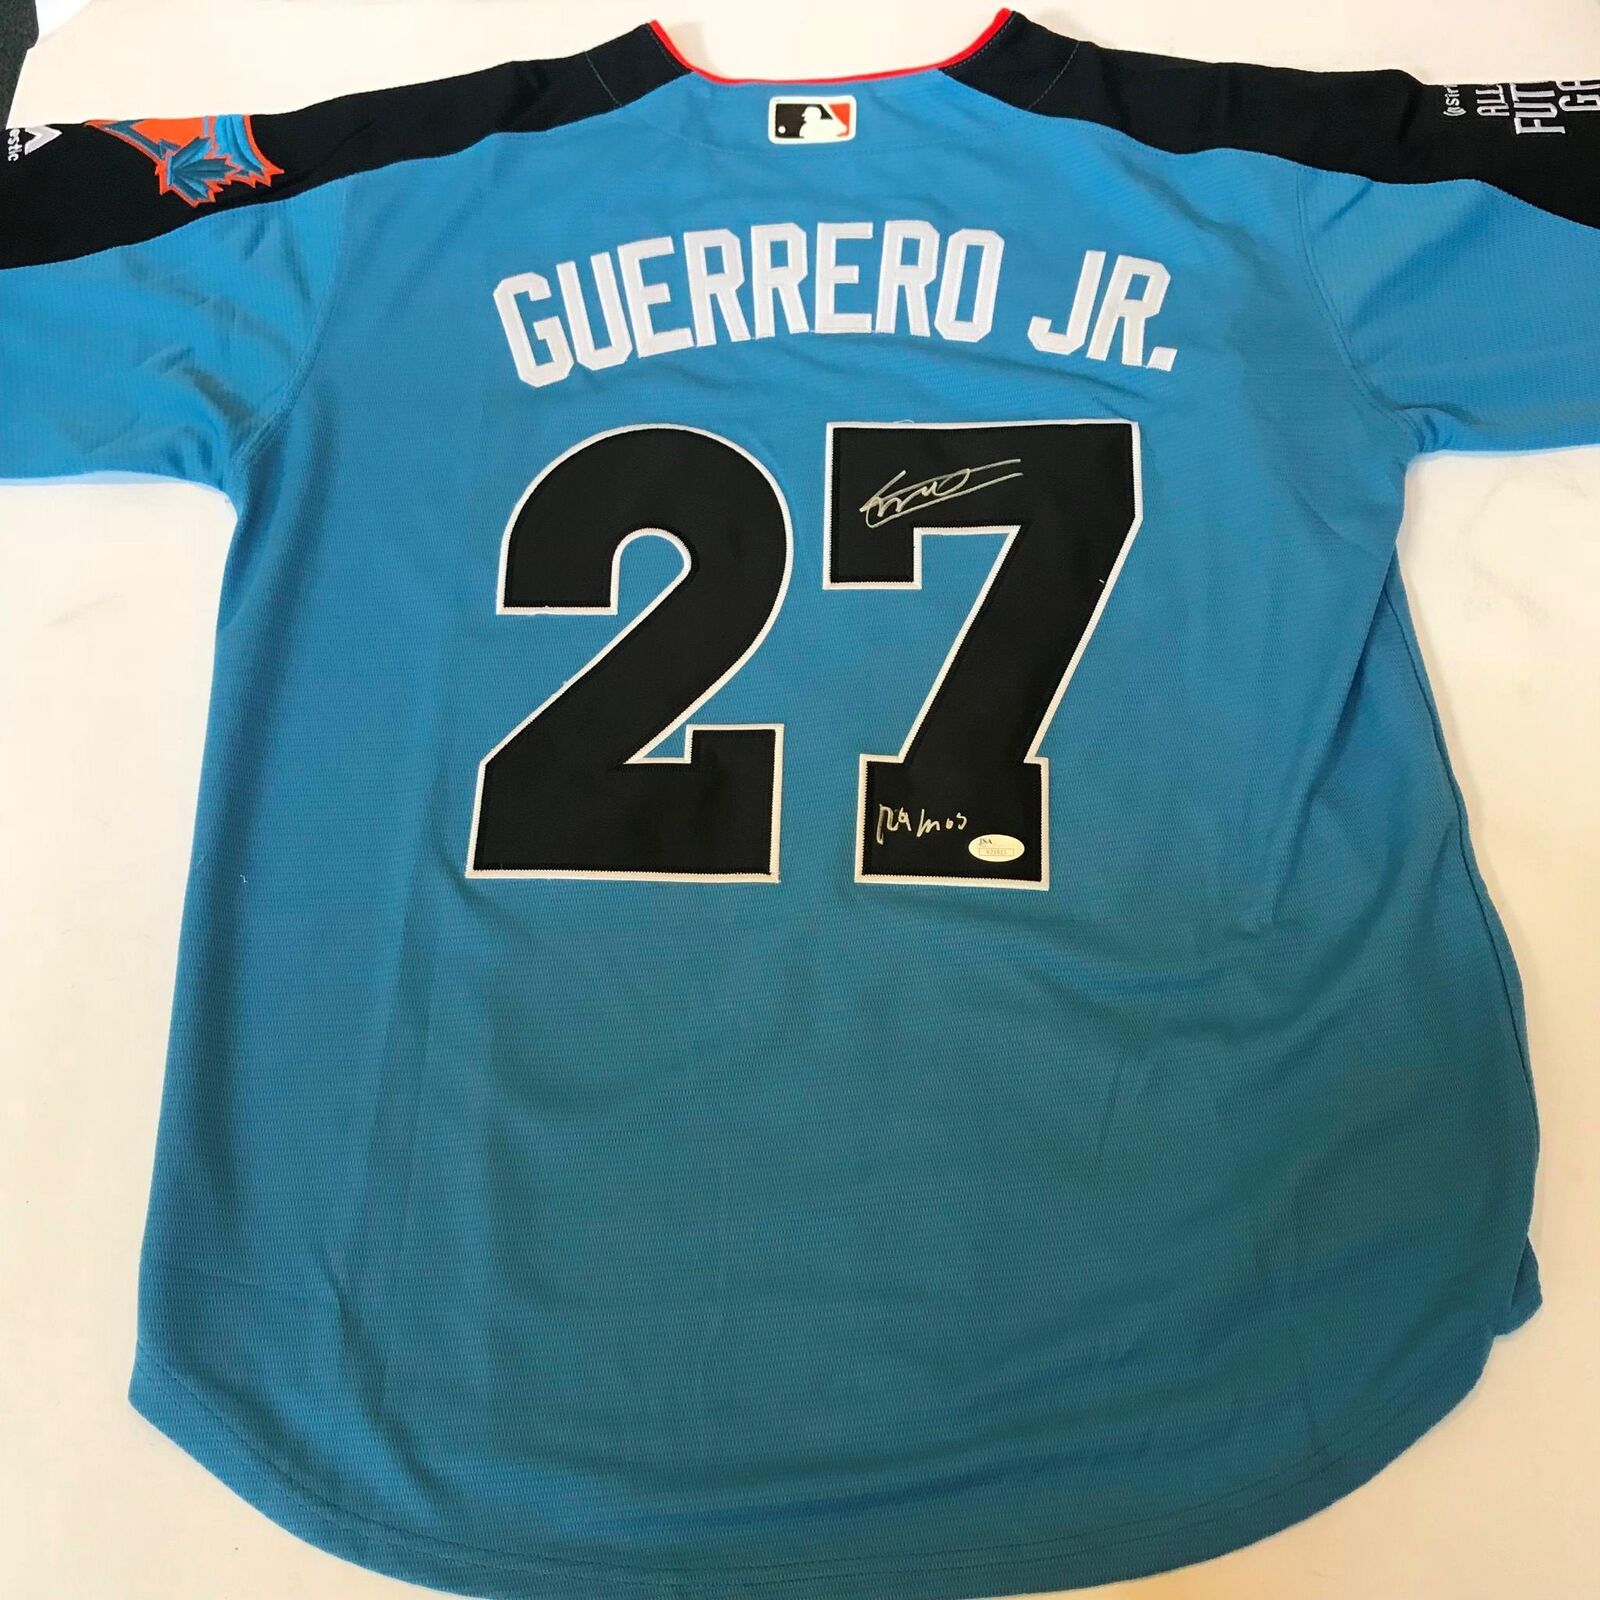 Vladimir Guerrero Jr. Signed All-Star Futures Game Jersey (JSA COA